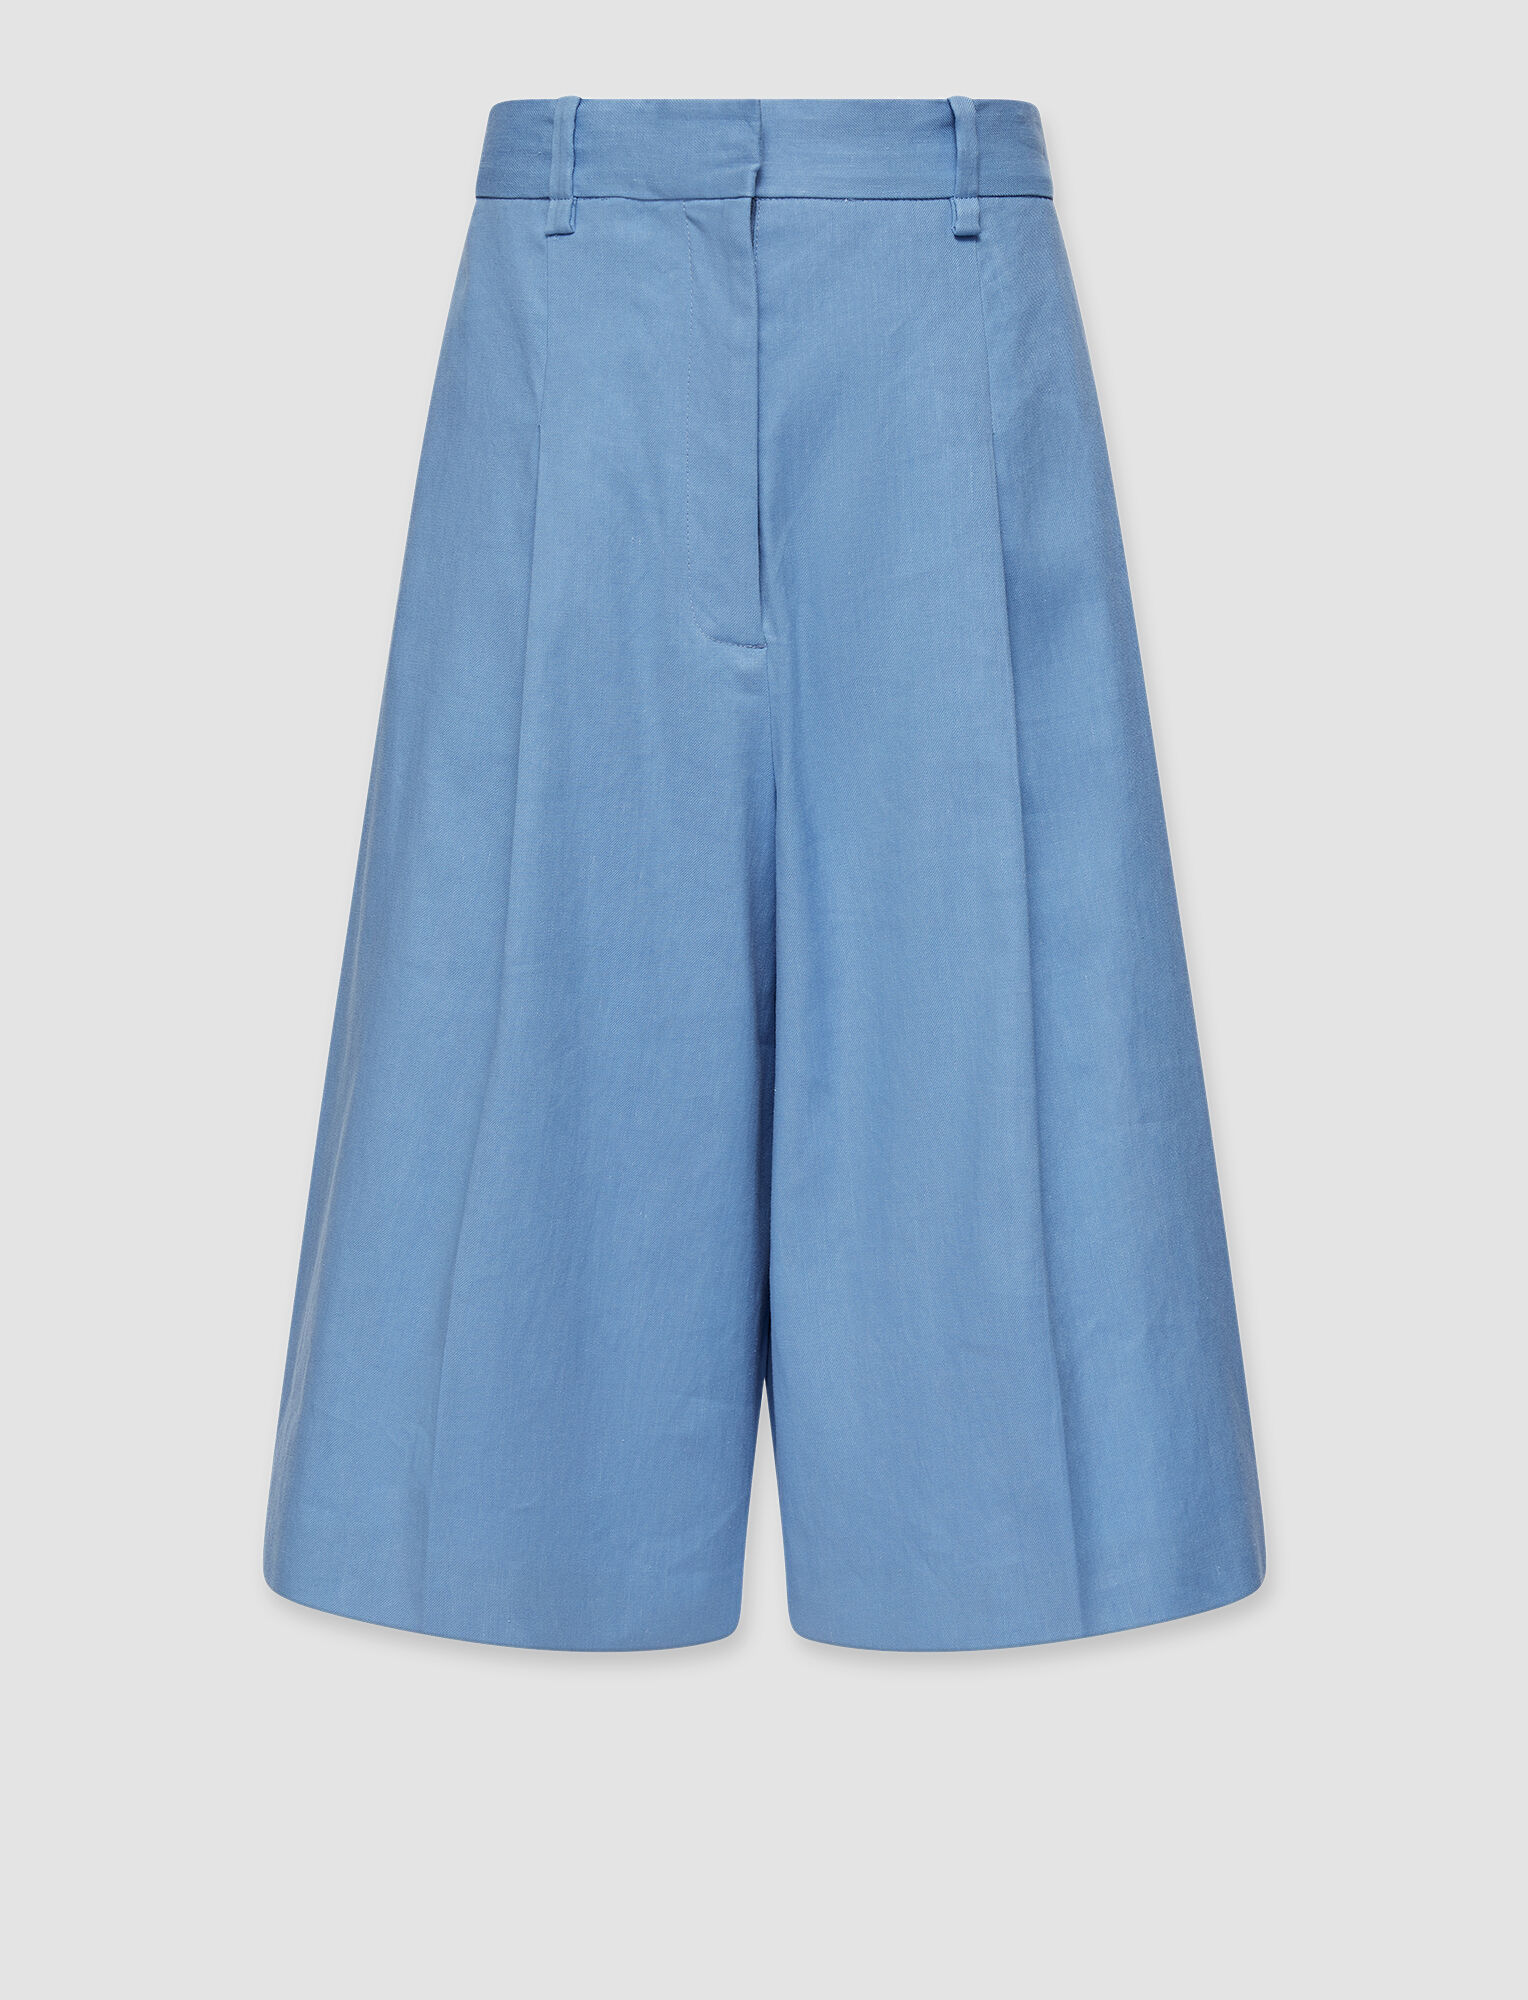 Joseph, Stretch Linen Cotton Tarah Shorts, in Sky blue